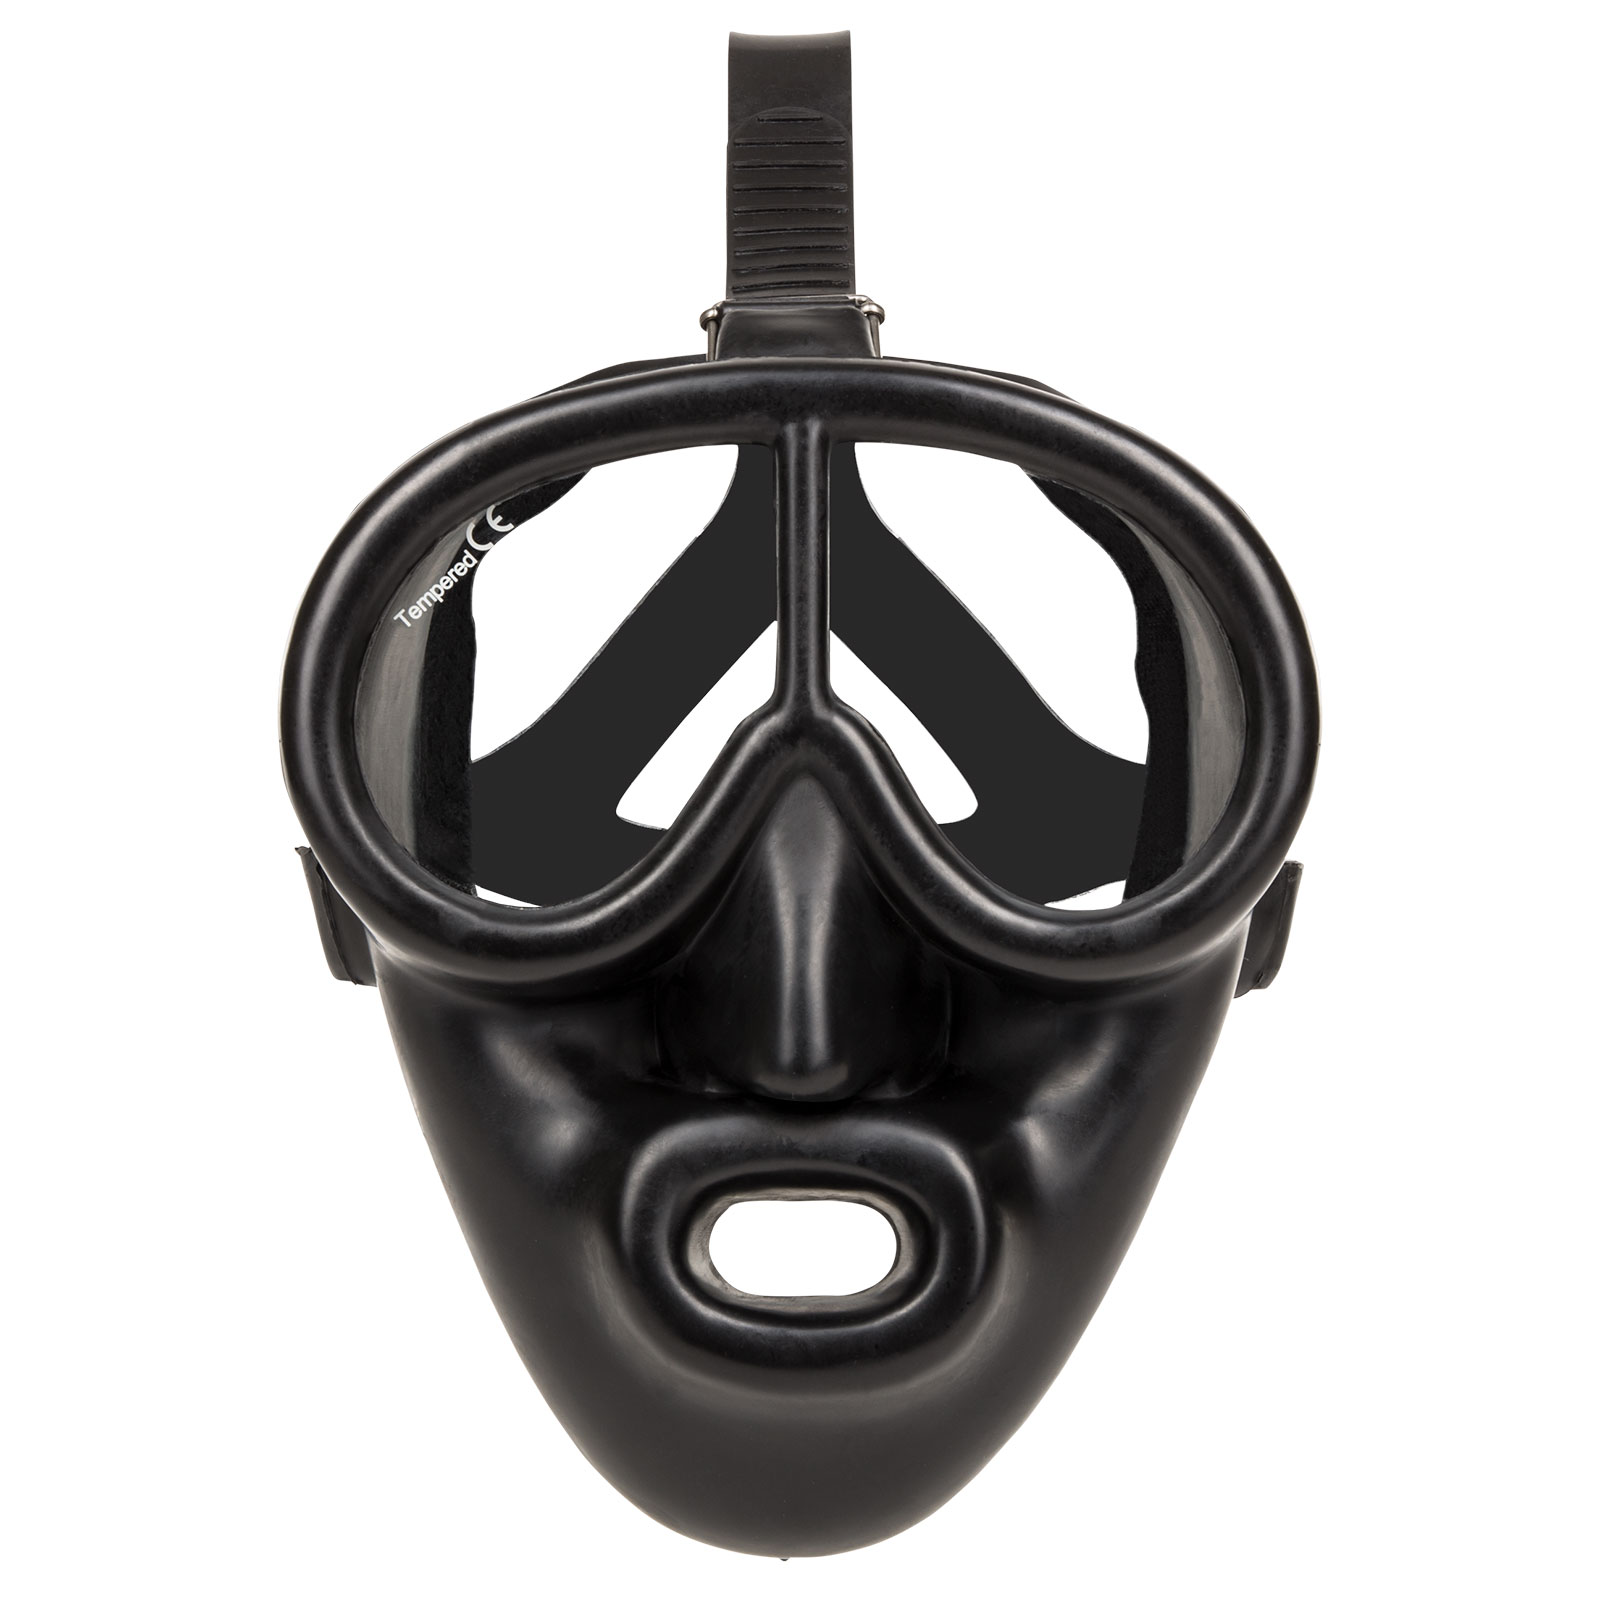 Ist m. Ist-m 37 полнолицевая маска. Полнолицевая маска Pegasus. Full face Mask / полнолицевая маска ek201. Полнолицевая маска для дайвинга.